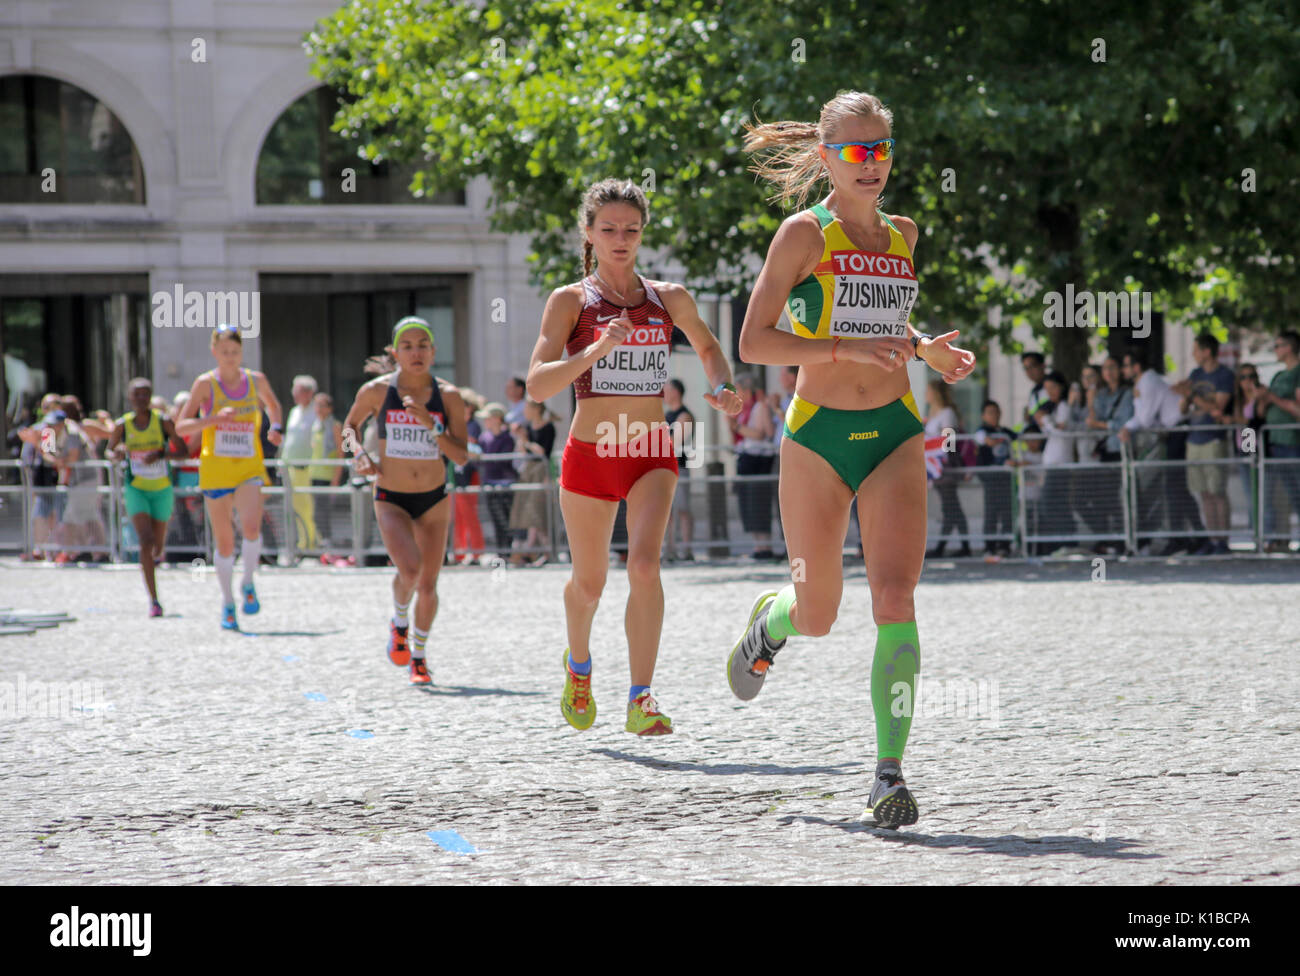 6 Aug '17 London:`Lithuanian and Croatian athletes Vaida Zusinaite and Bojana Bjeljac compete in 2017 World Athletics Championship women's marathon Stock Photo